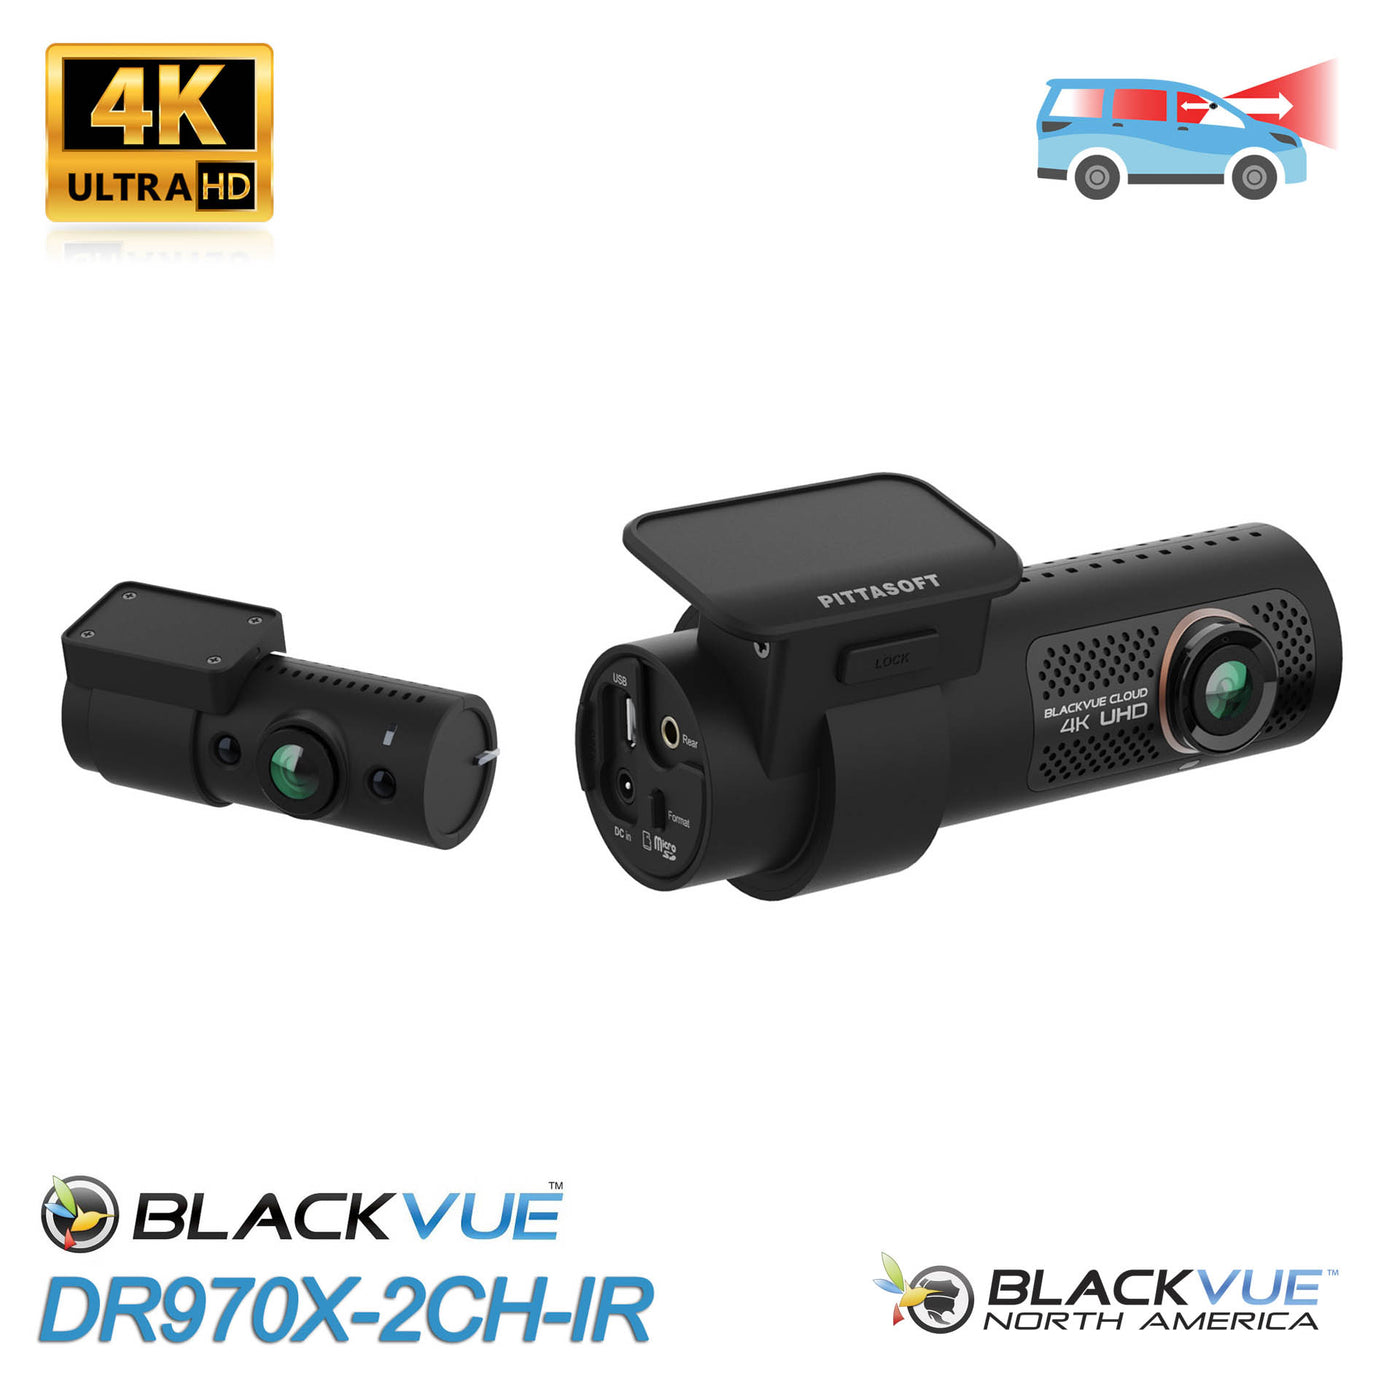 BlackVue DR970X-2CH-IR 4K Cloud-Ready Dash Cam – BlackVue North America